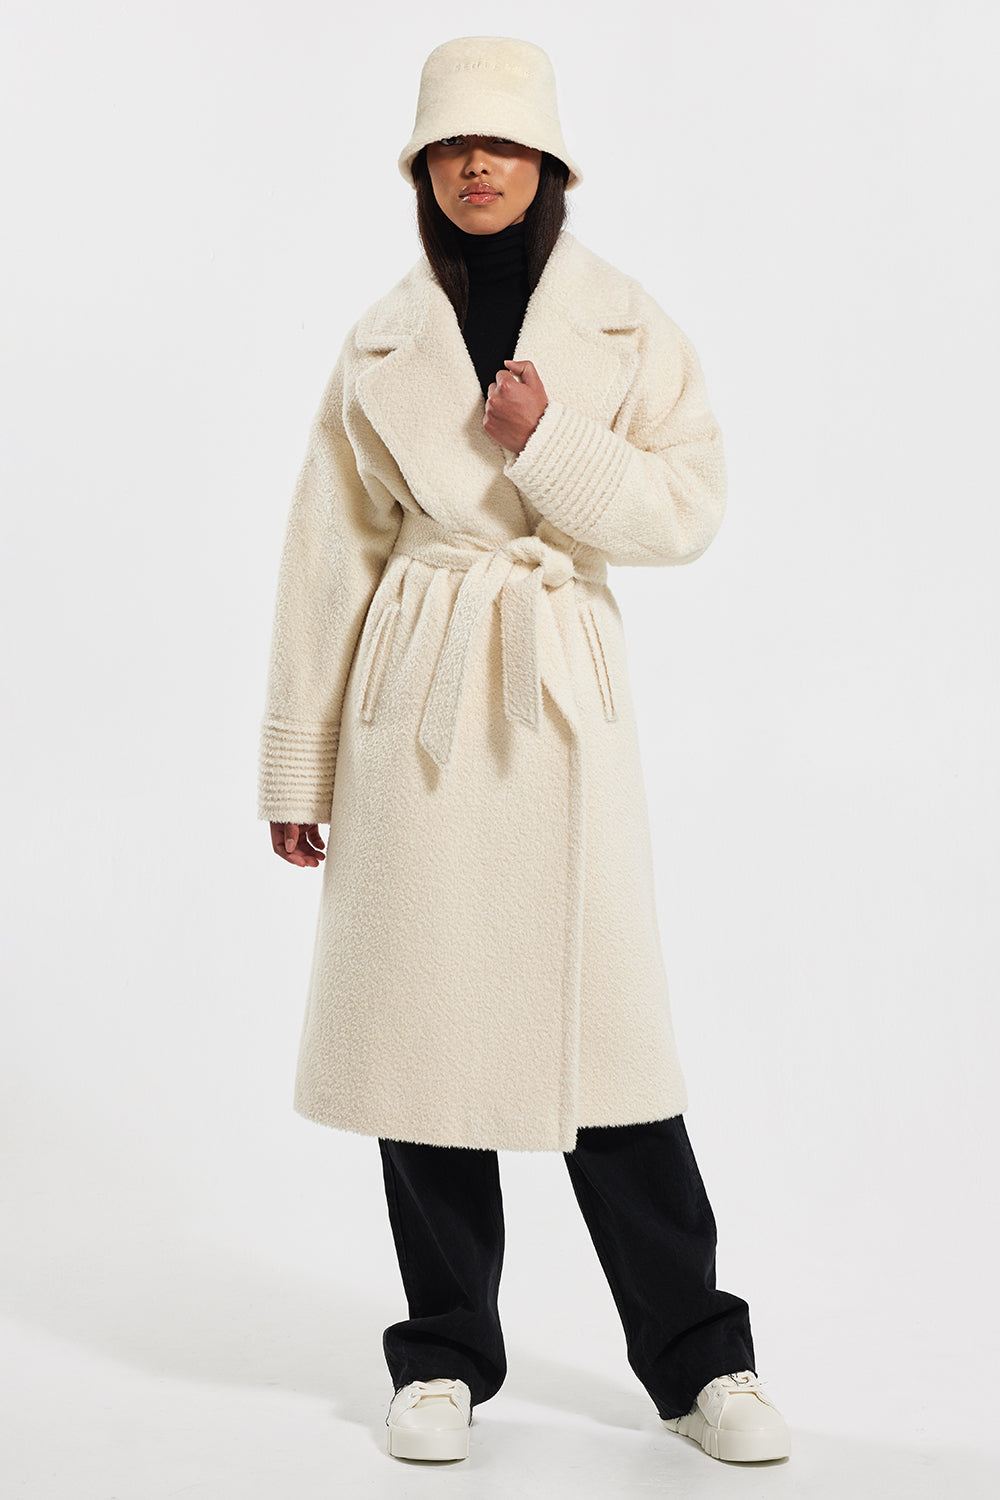 BUSINESS CHIC Bojana Sentaler wears the Mid Length Hooded Wrap